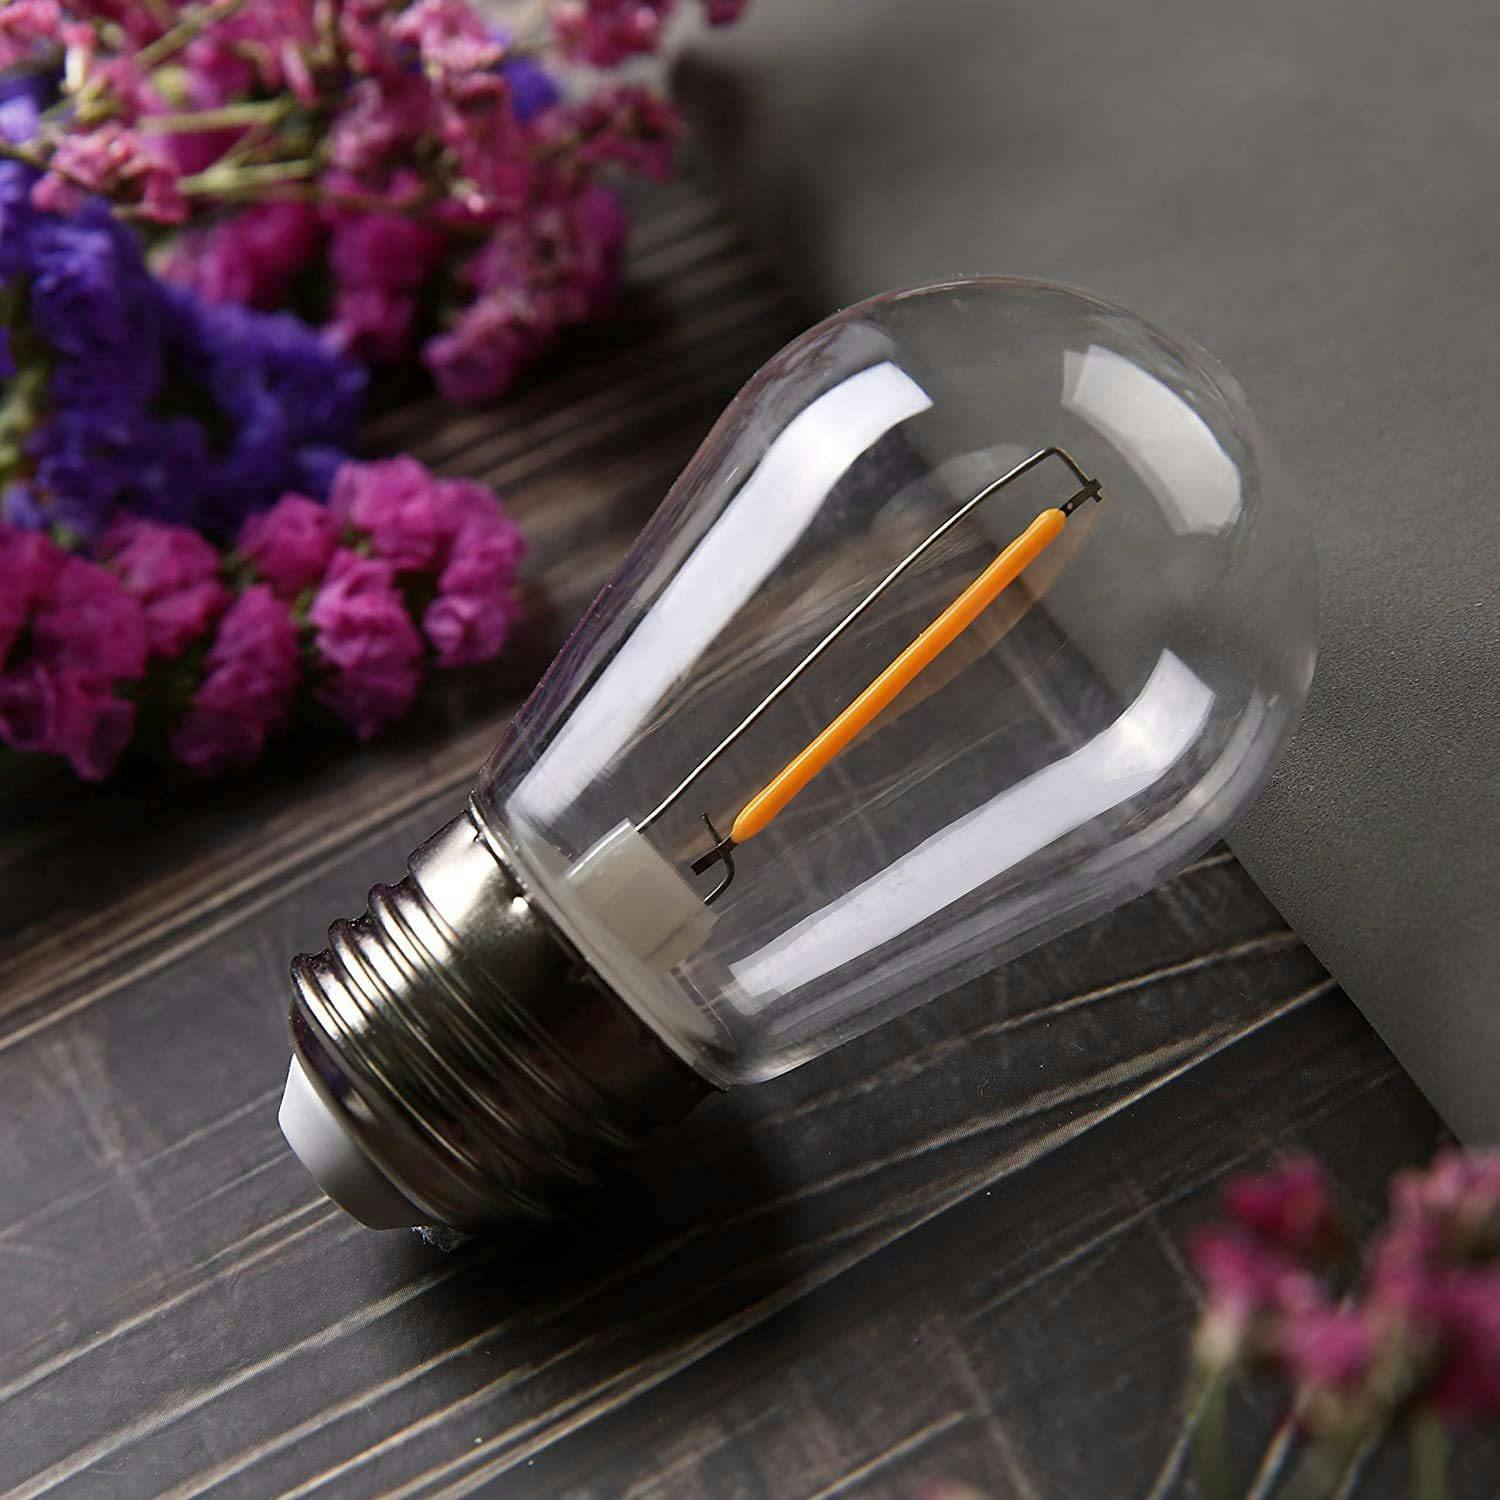 E27 LED-Lampe Dimmbare 1W - 2700K Warmweiß Energieklasse A+